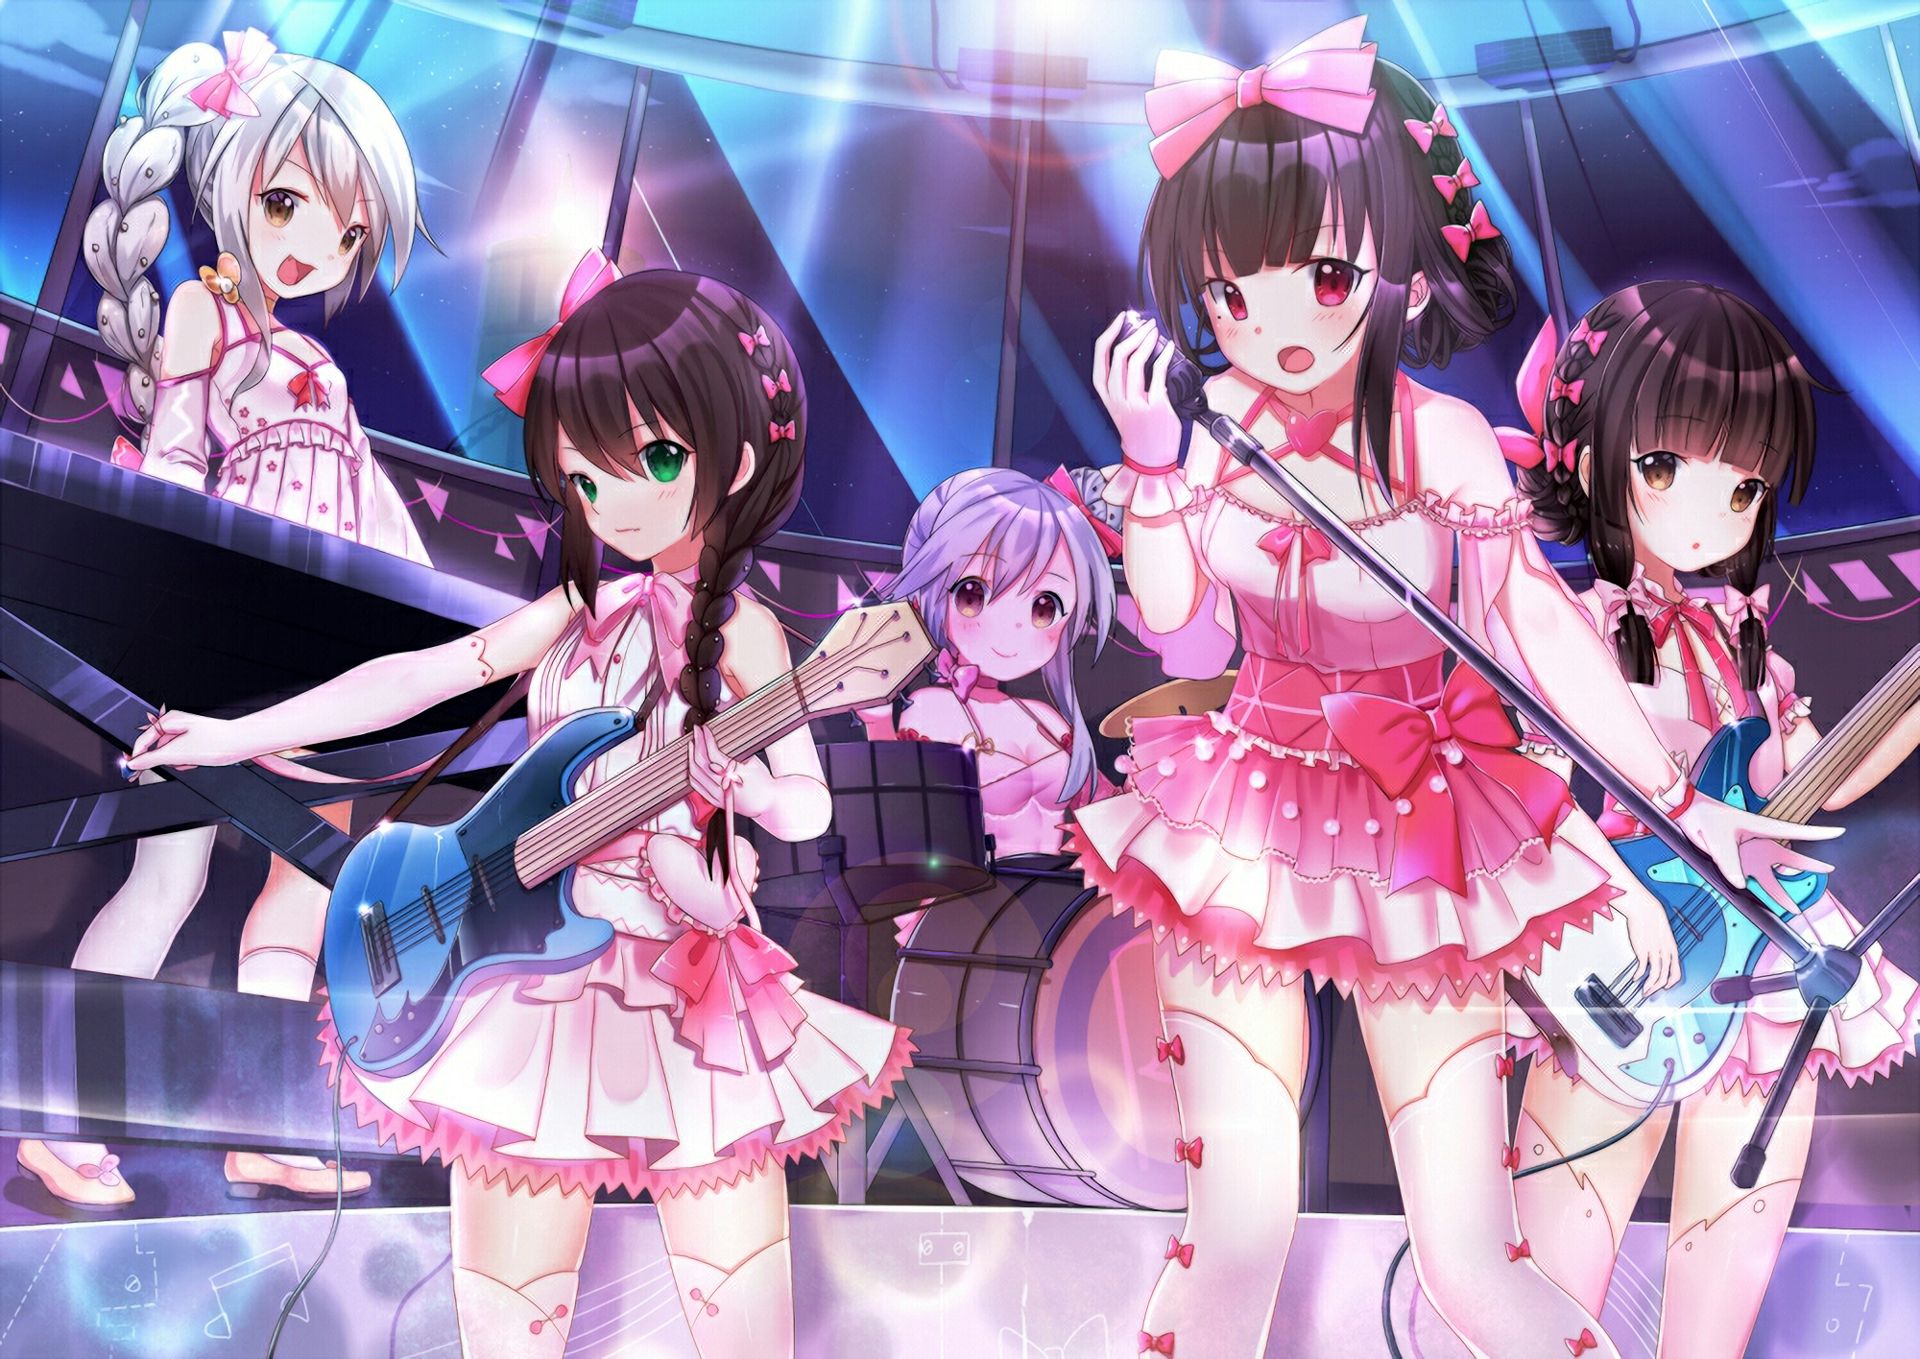 Baixar papel de parede para celular de Anime, Garotas Do Navio De Guerra gratuito.